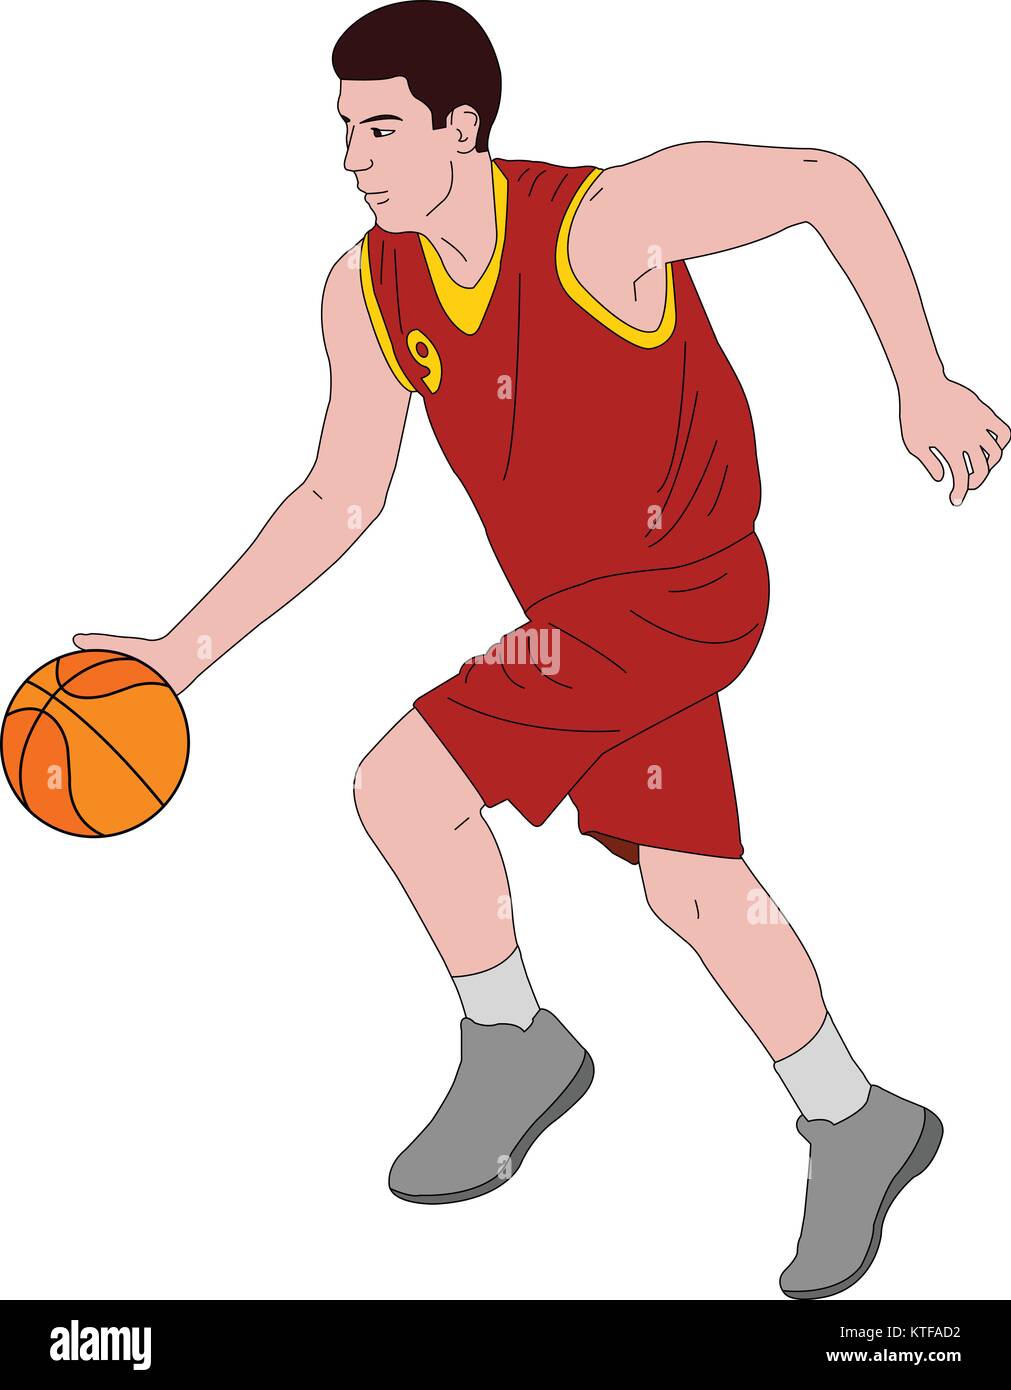 basketball player illustration - vector Stock Vector